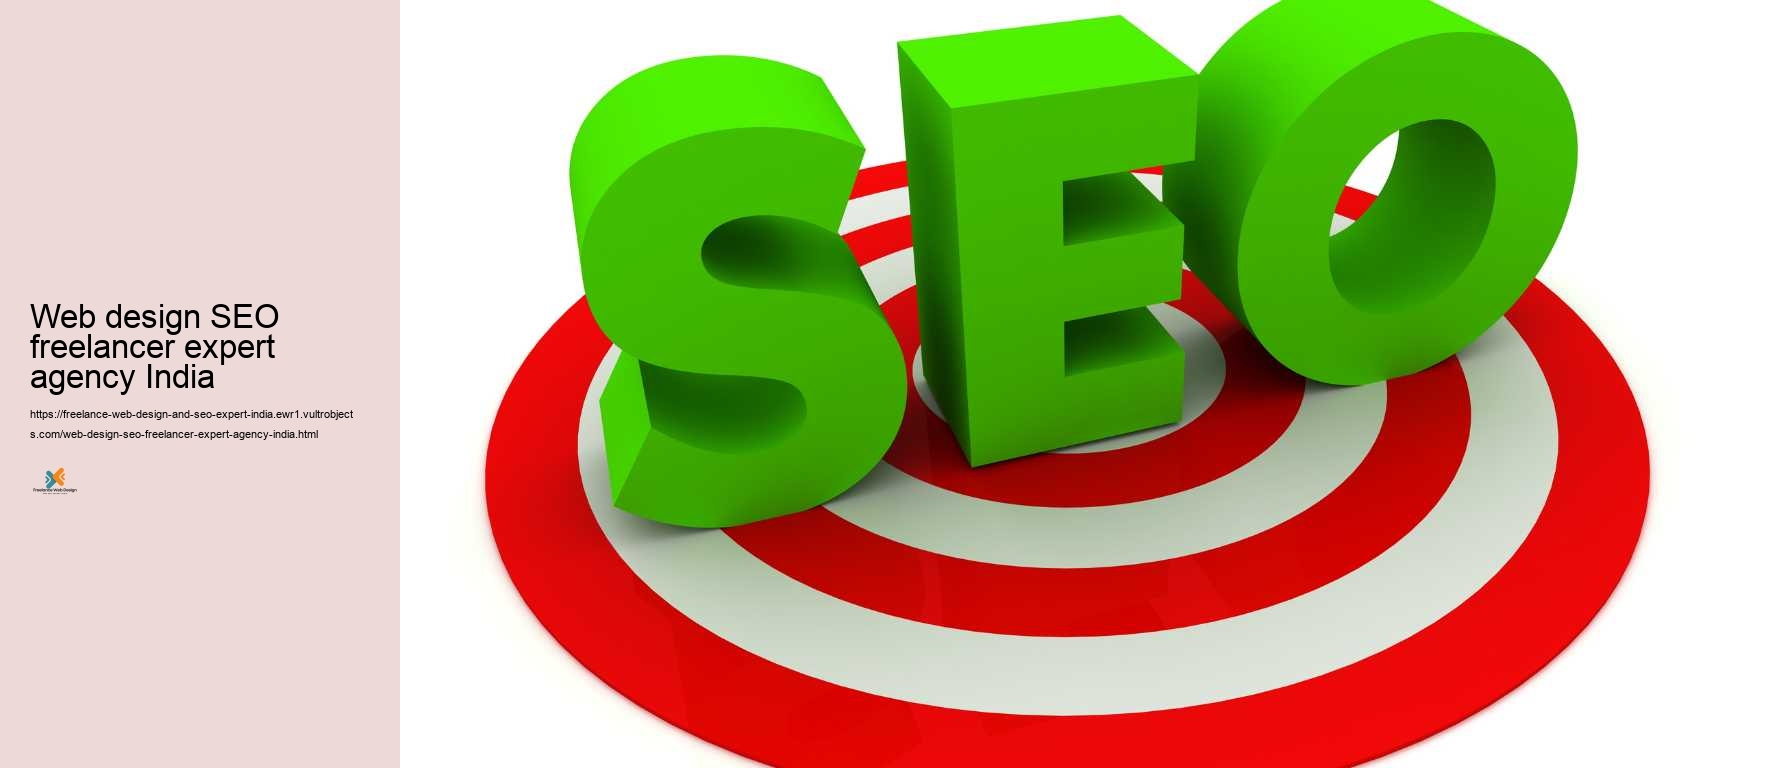 Web design SEO freelancer expert agency India